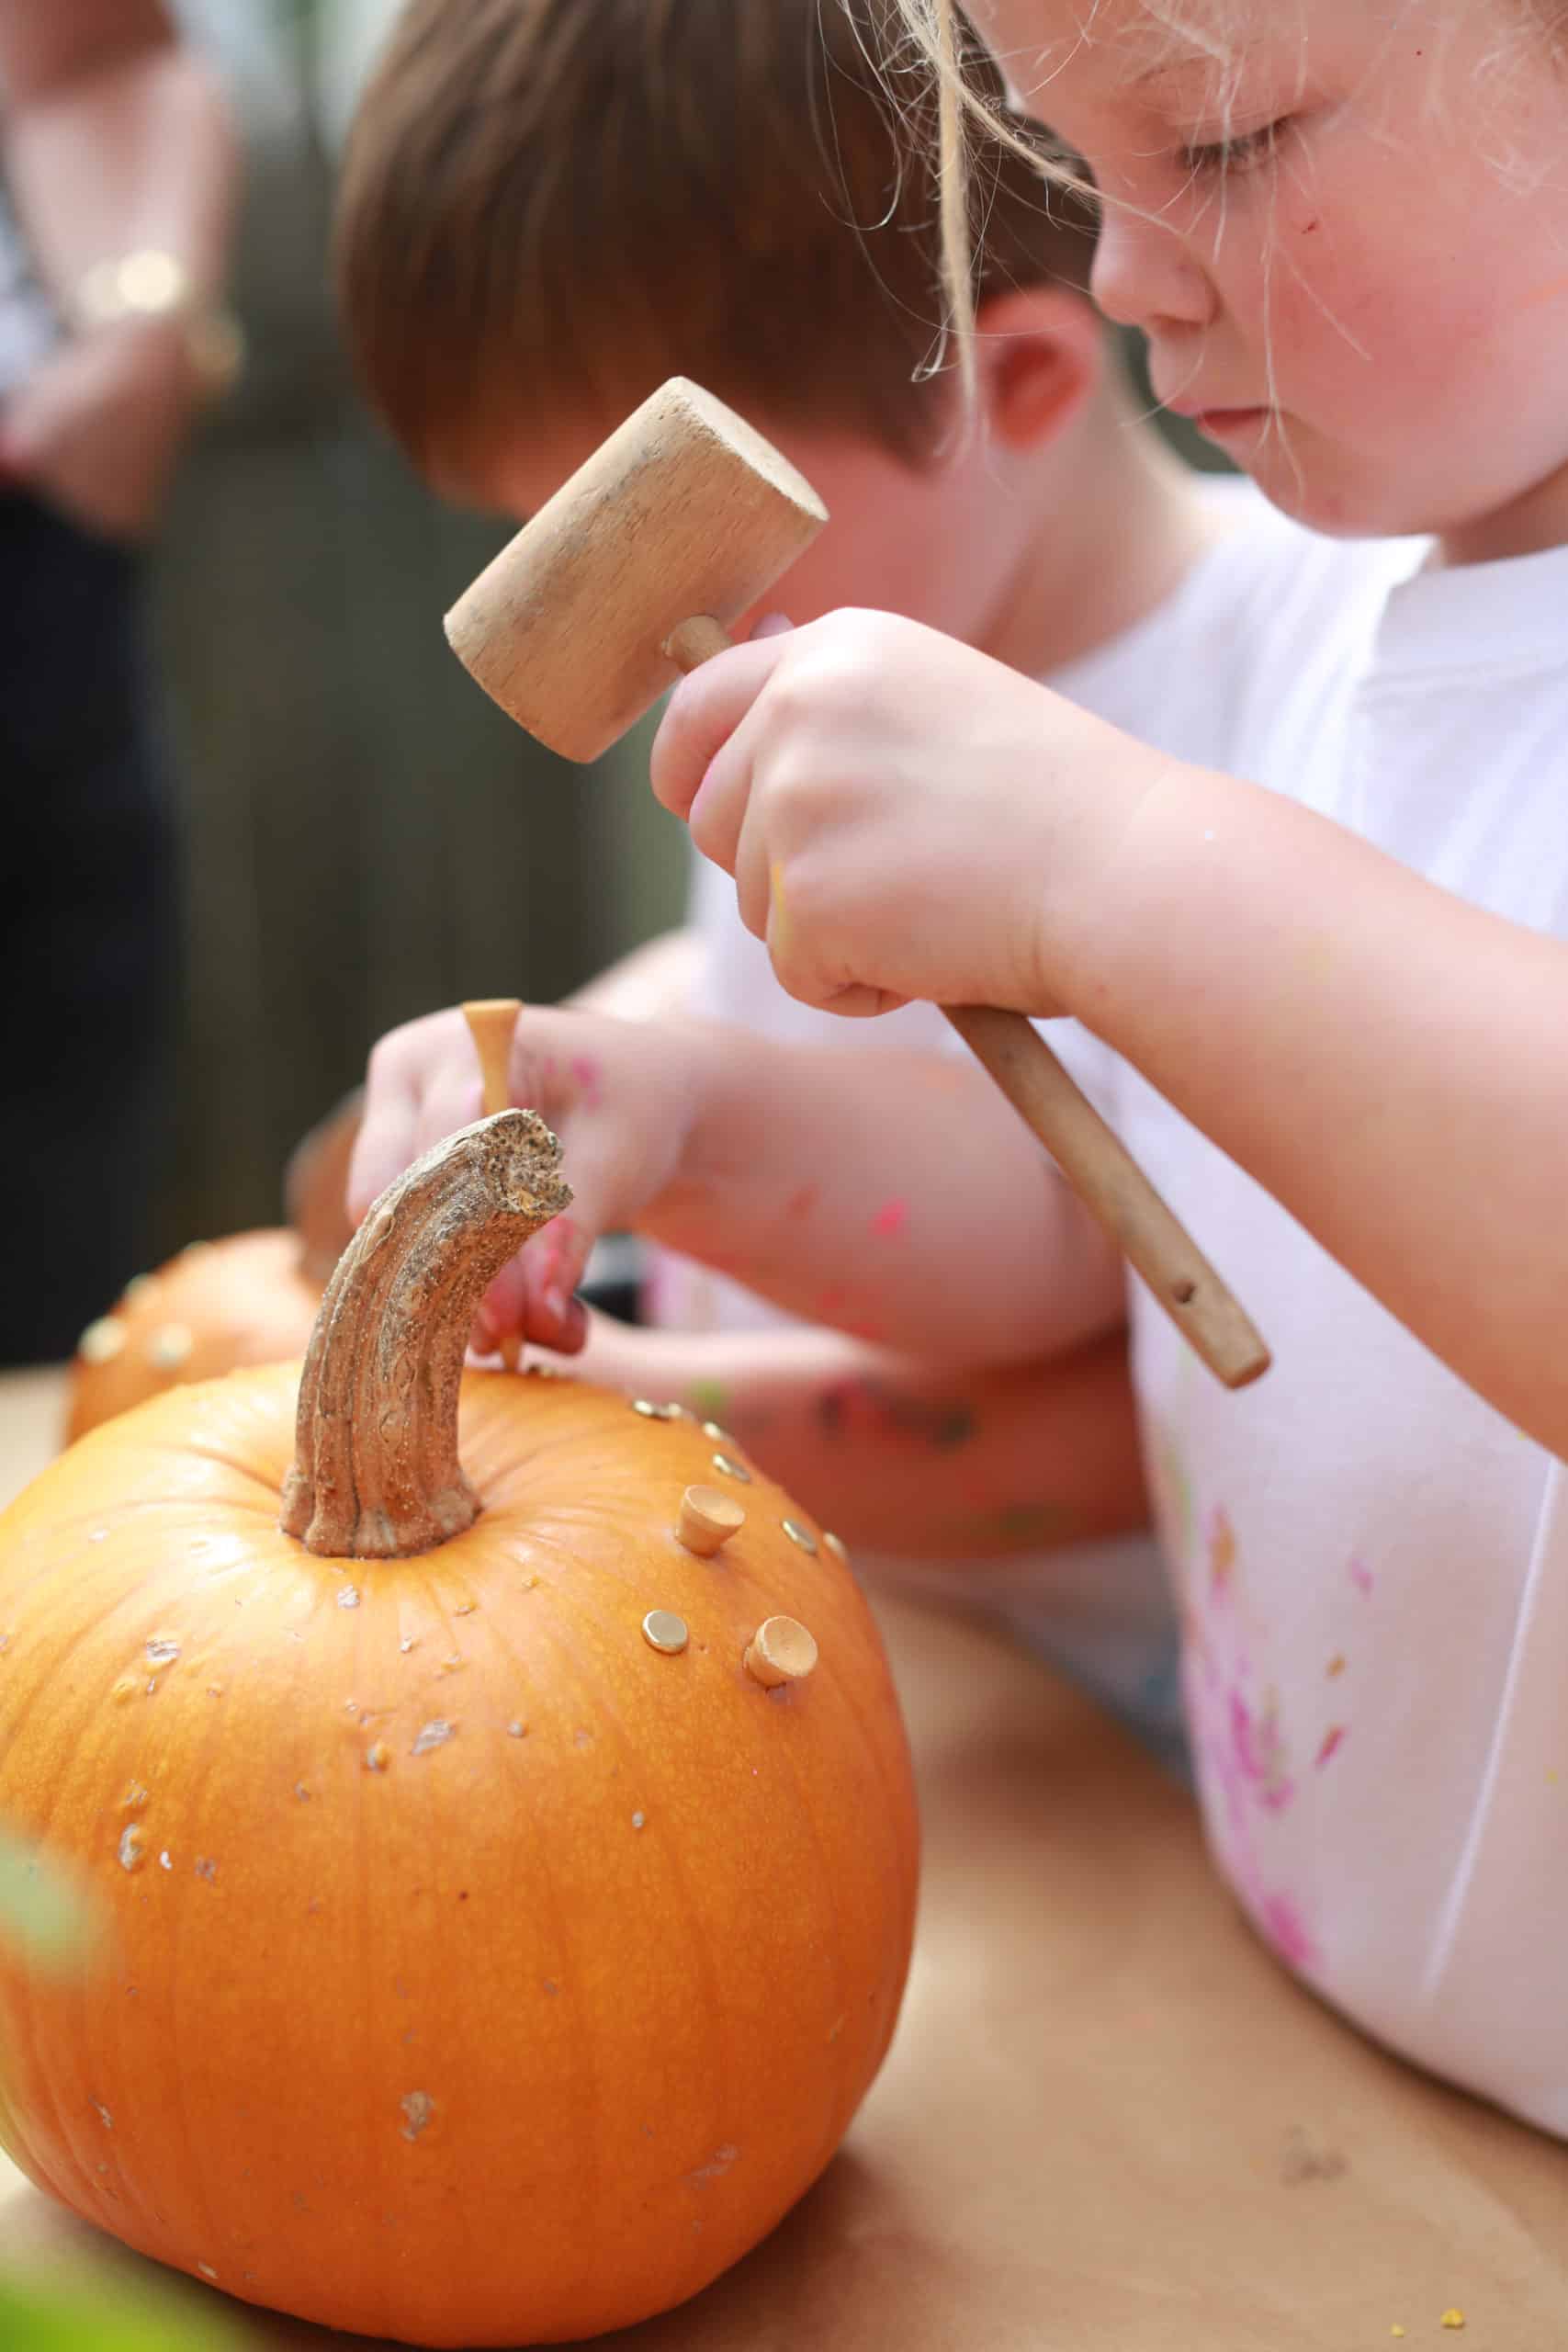 pounding pumpkin activity for kids